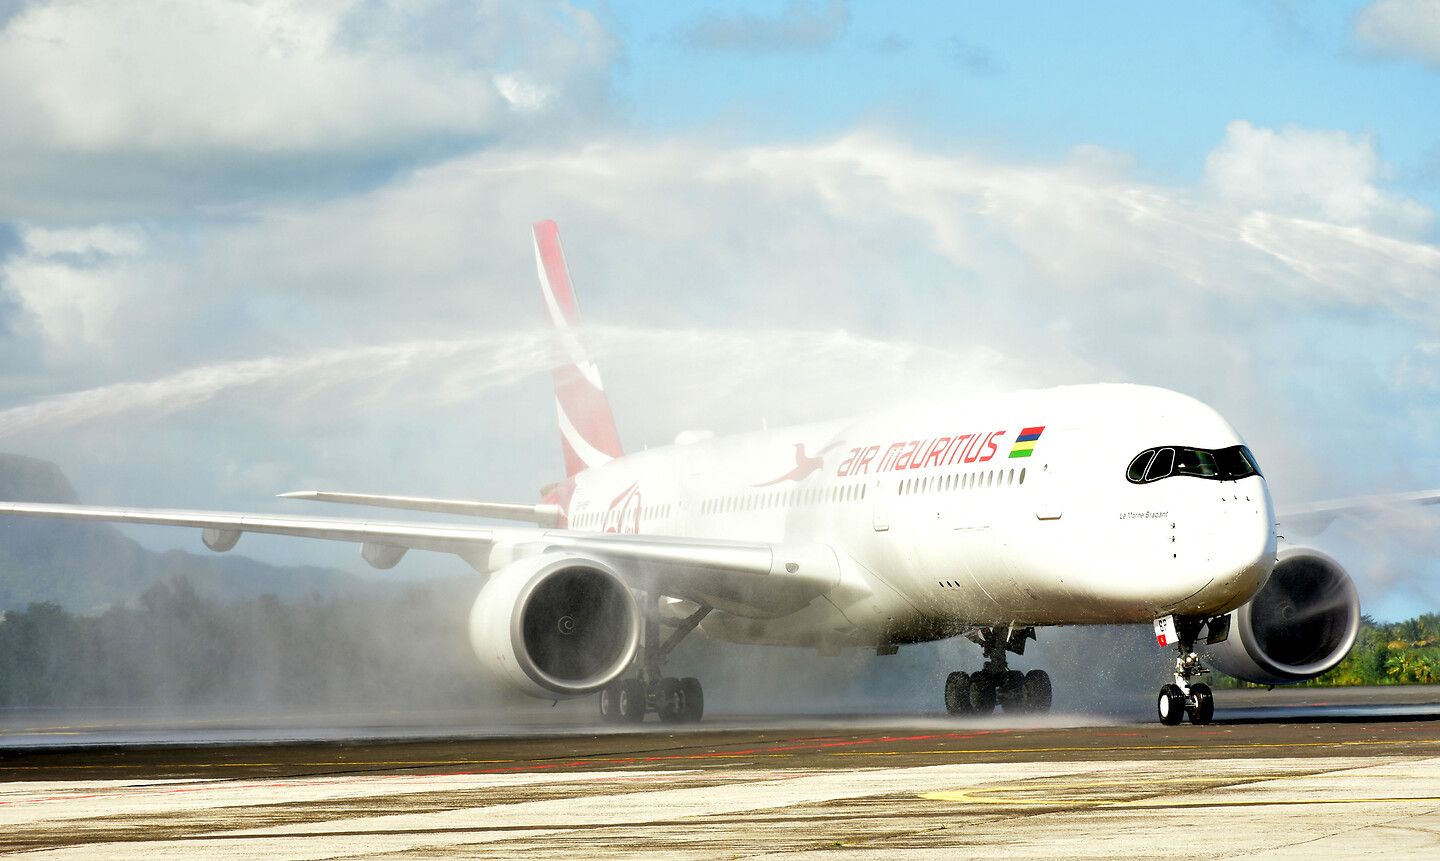 Air Mauritius Ditches London Heathrow For Gatwick As Flights Enhance